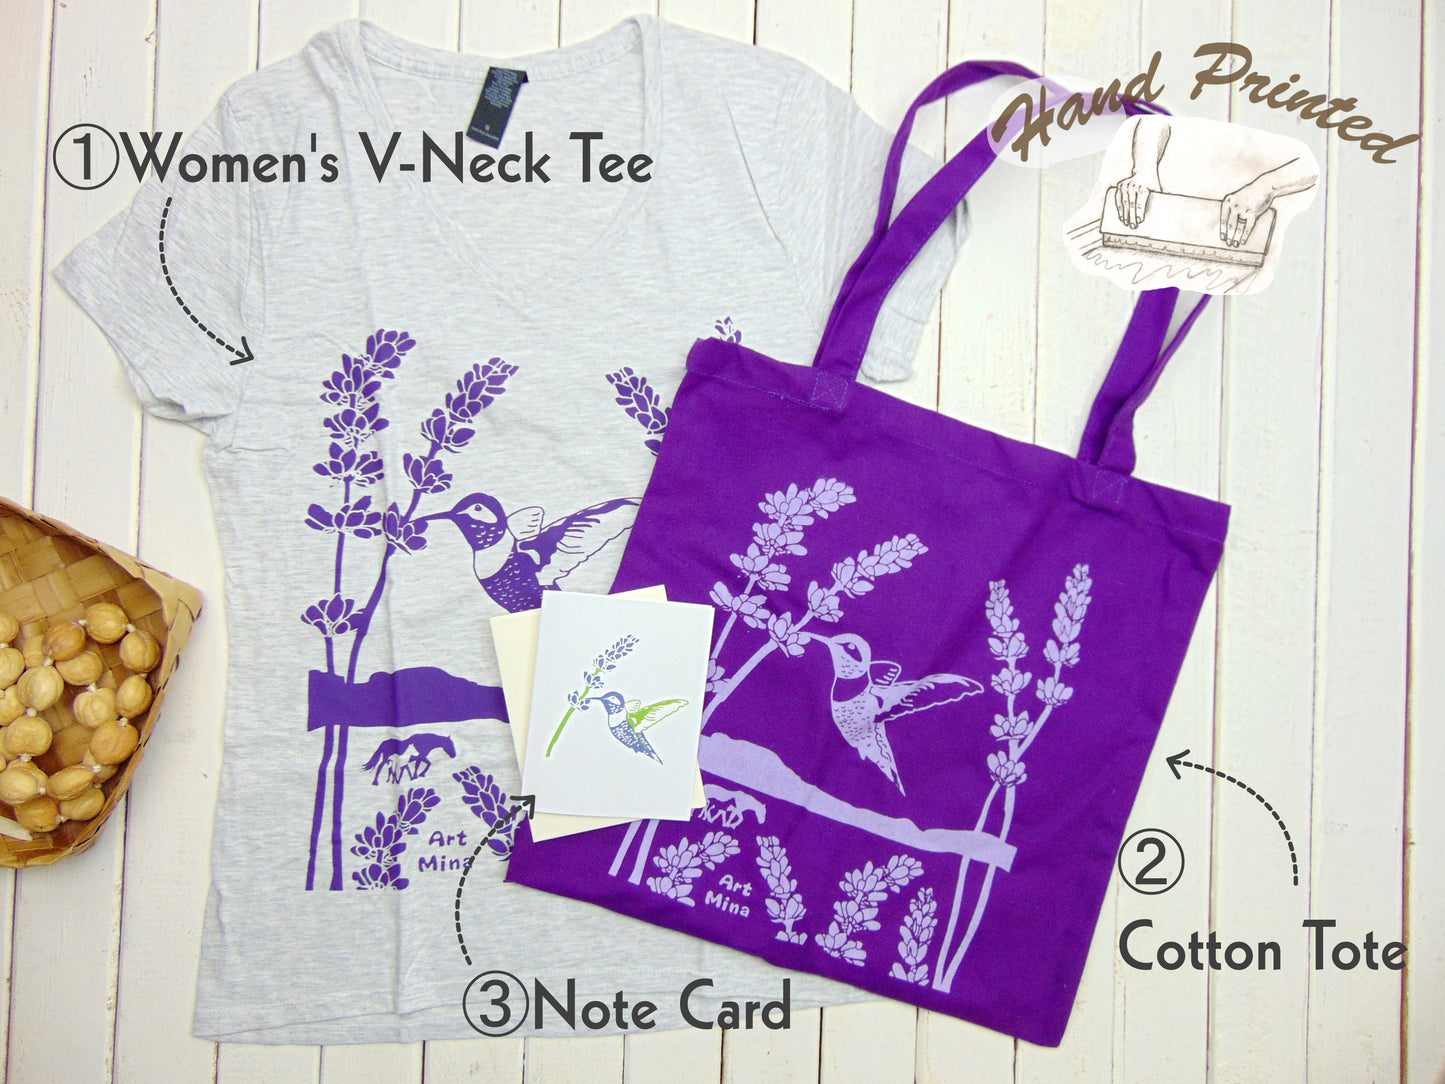 Hummingbird Lavender Gift Set - Hand Screen printed Tee & Tote Bag